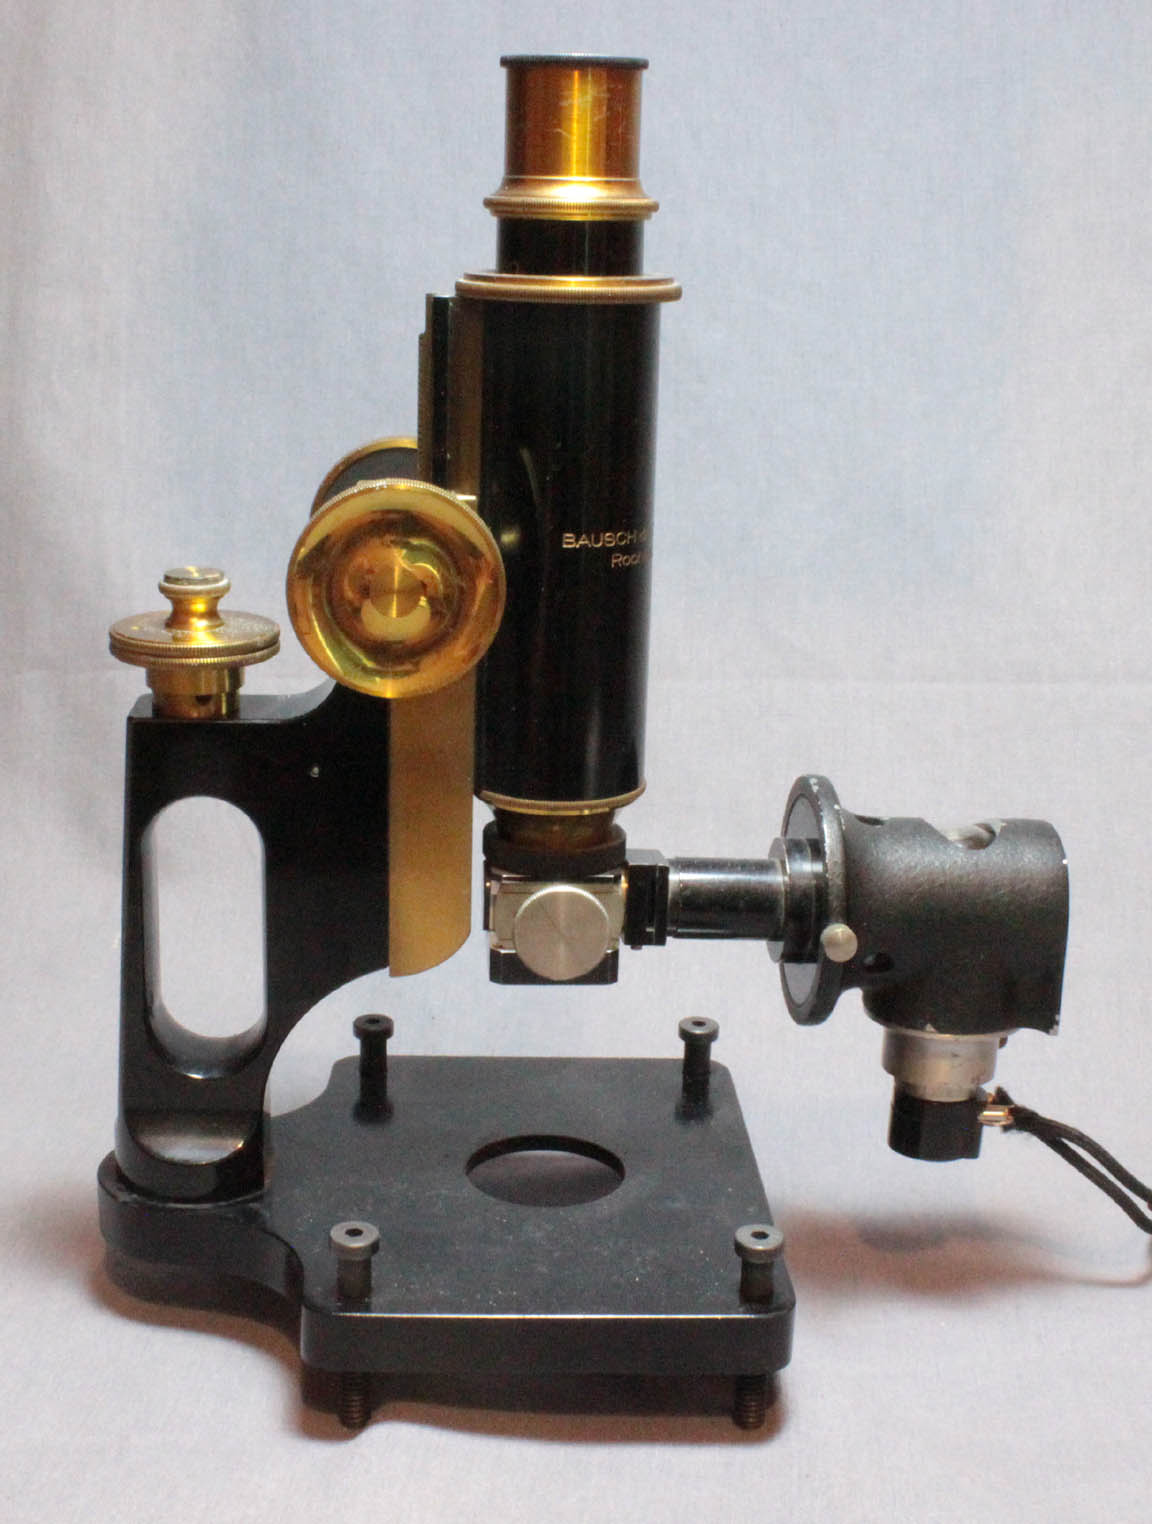 BHM Microscope